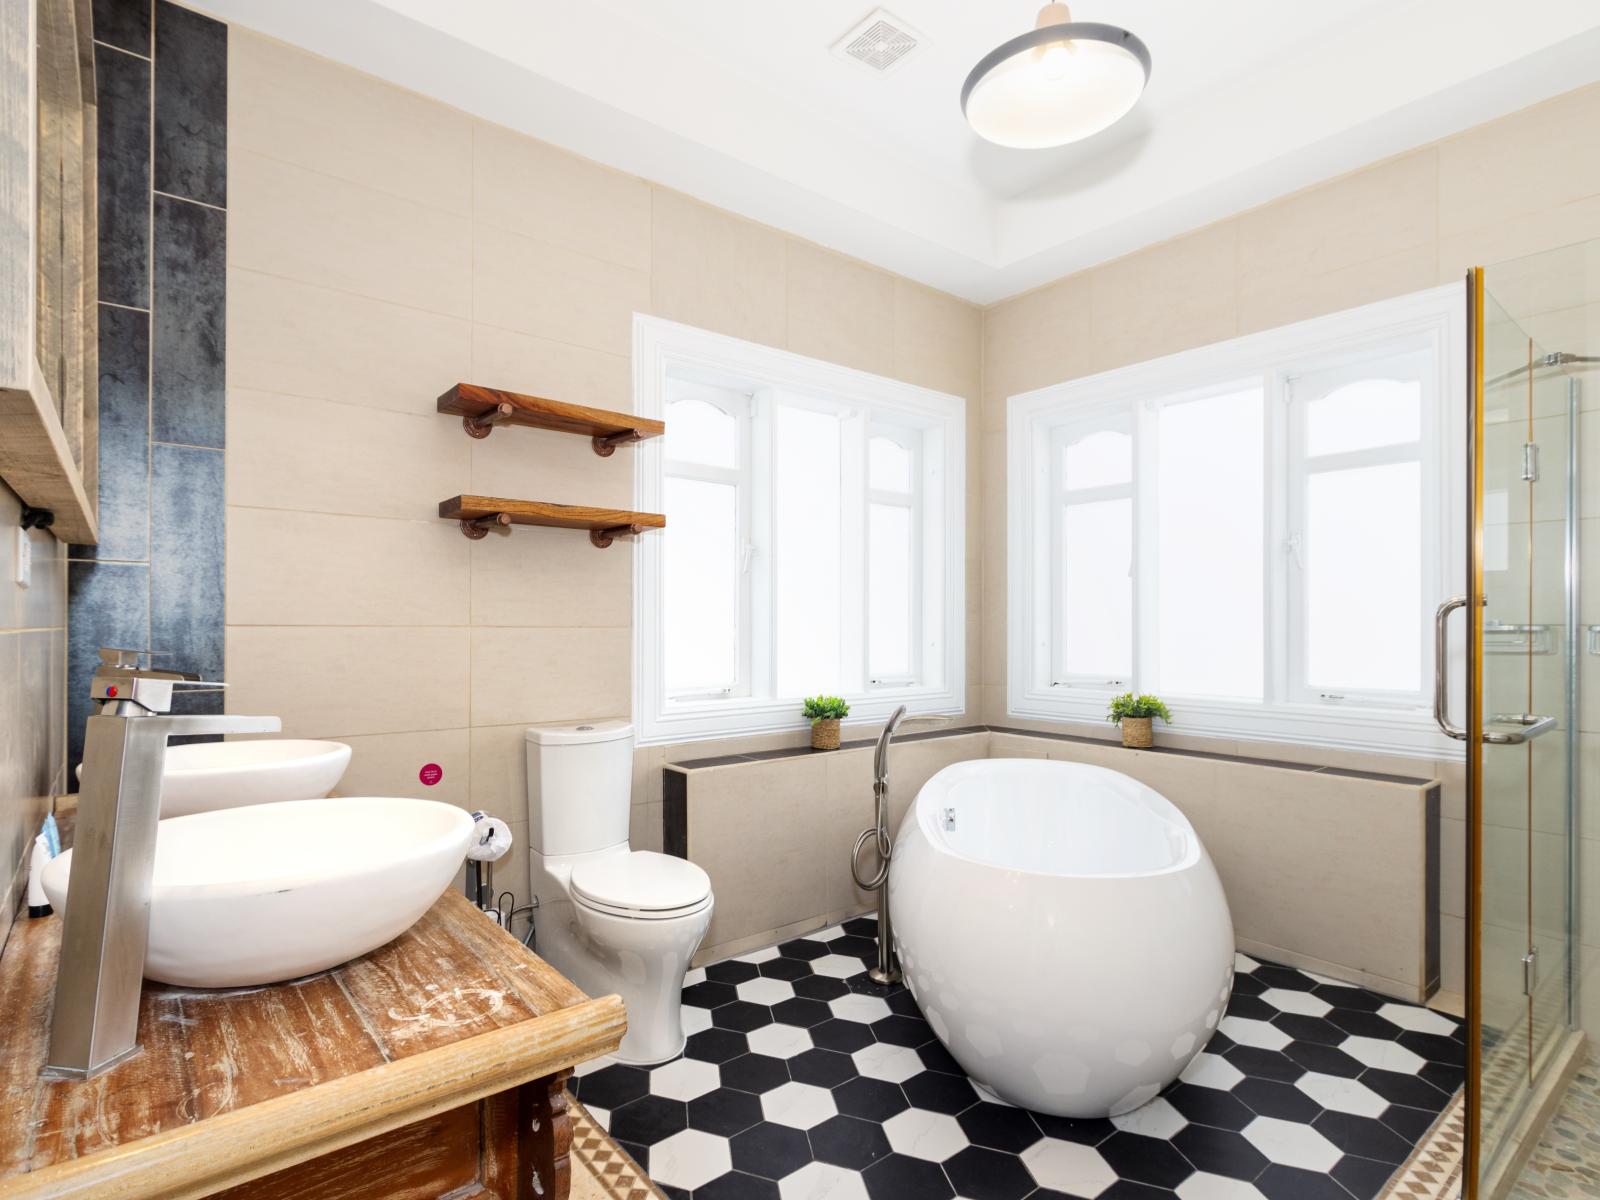 Lavish Bathroom of the Apartment in Noord Aruba - Double vanity - Chic Free Standing Bathtub - Glass enclosed walk-in shower area